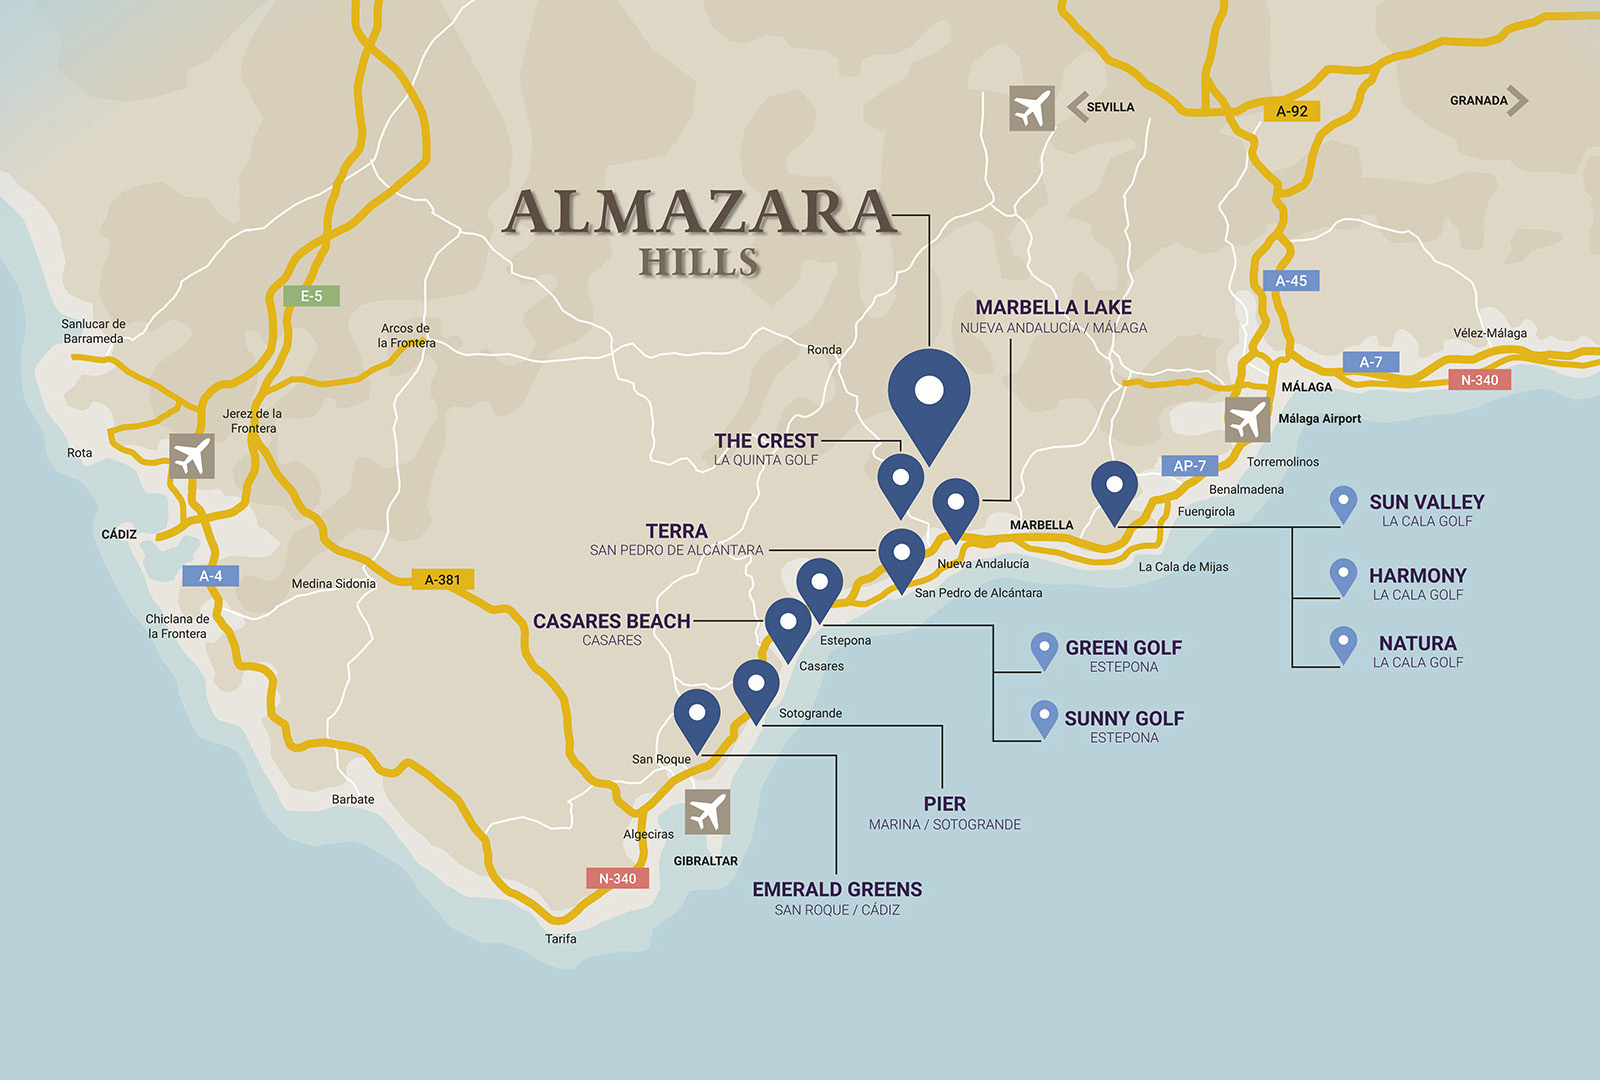 Mapa ALMAZARA movil ages